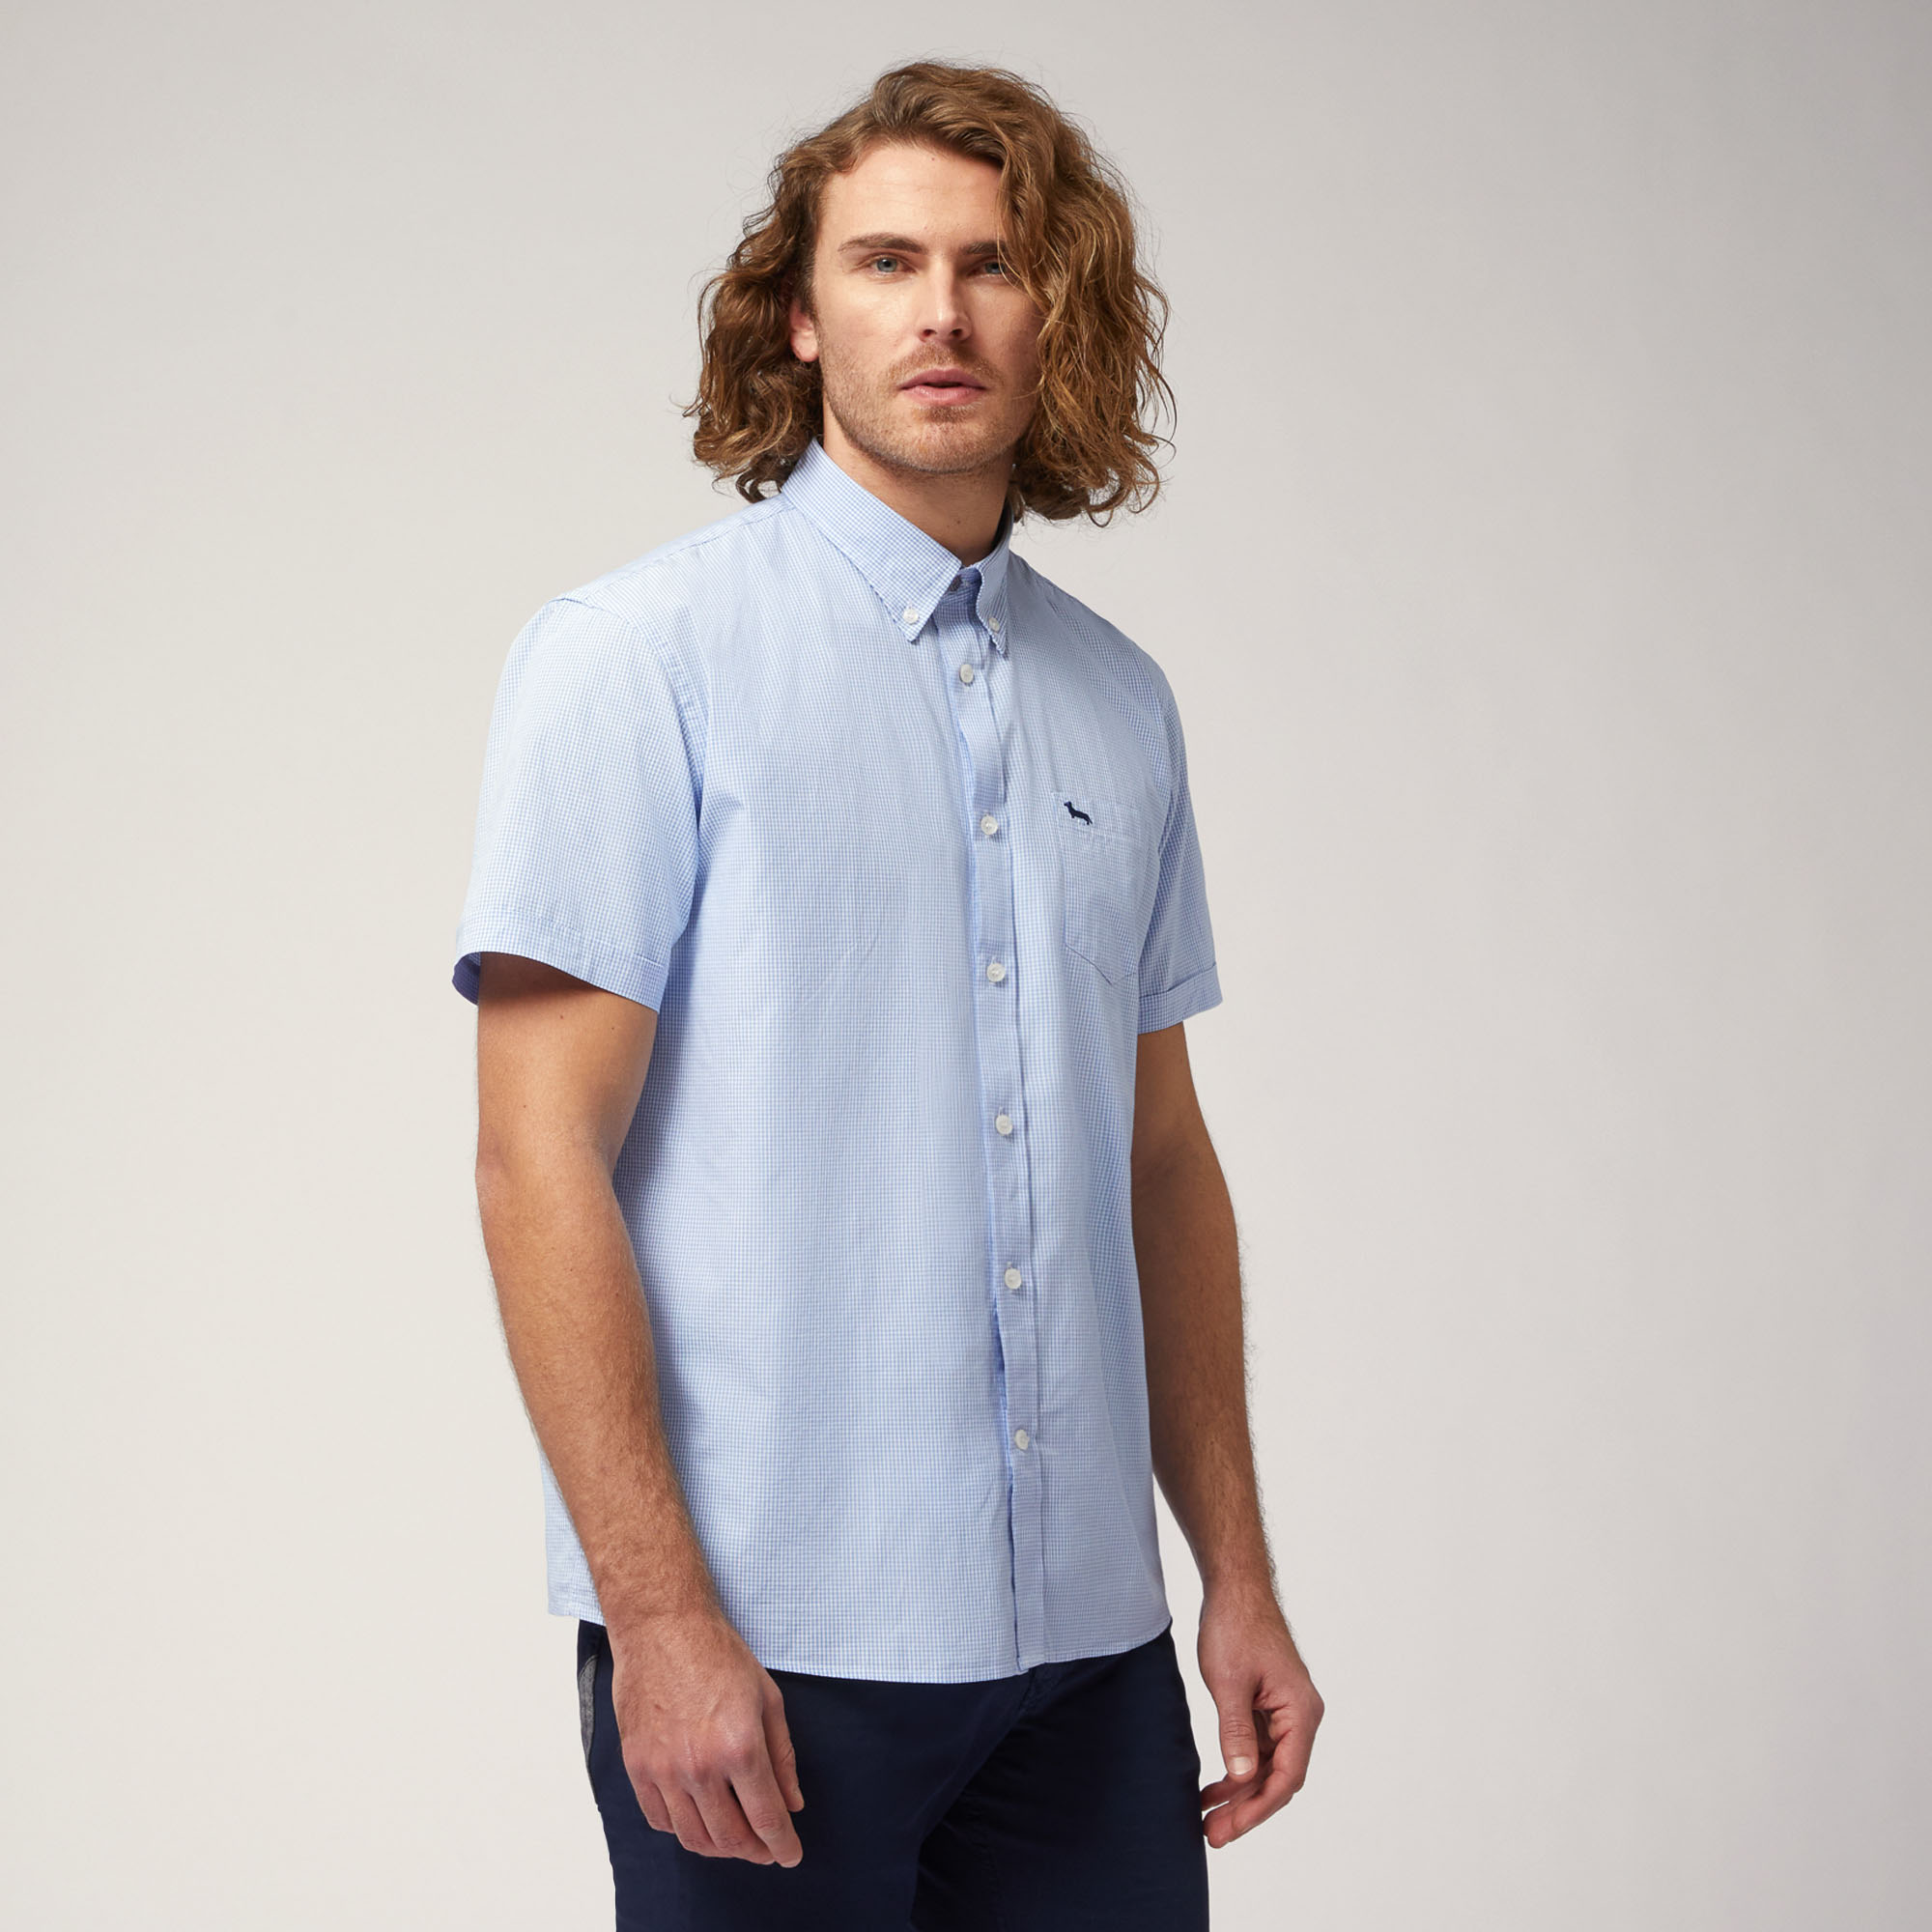 Organic Cotton Poplin Short-Sleeved Shirt, Sky Blue, large